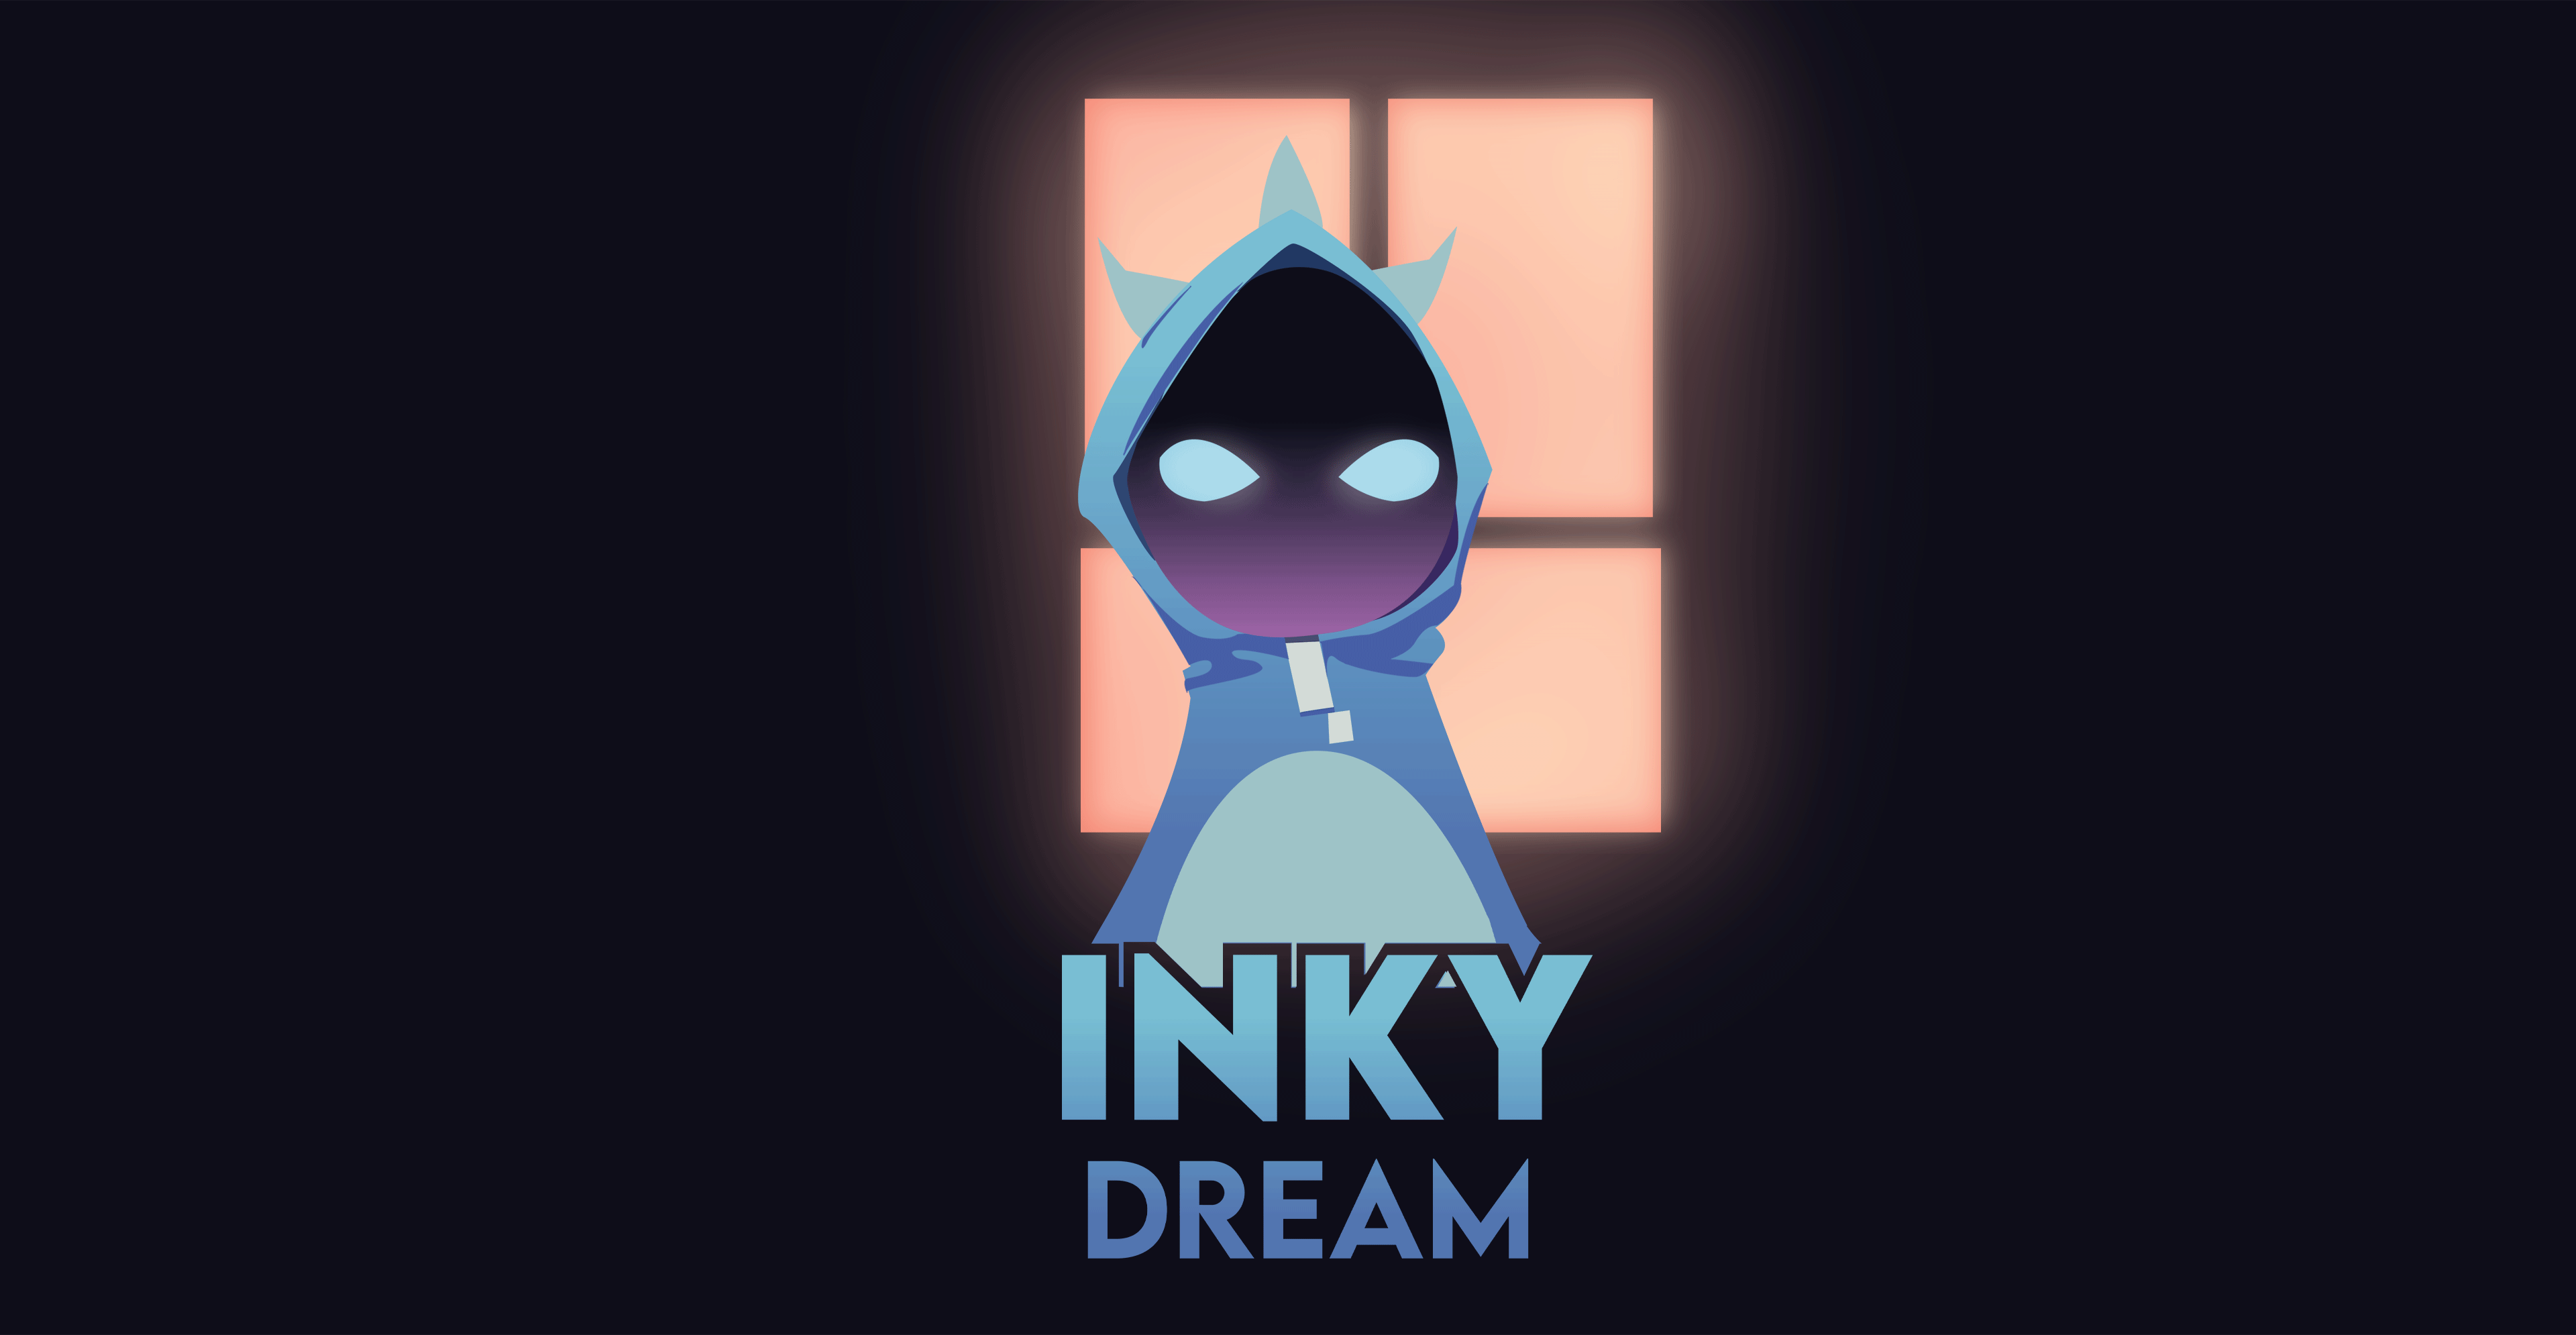 Inky Dream